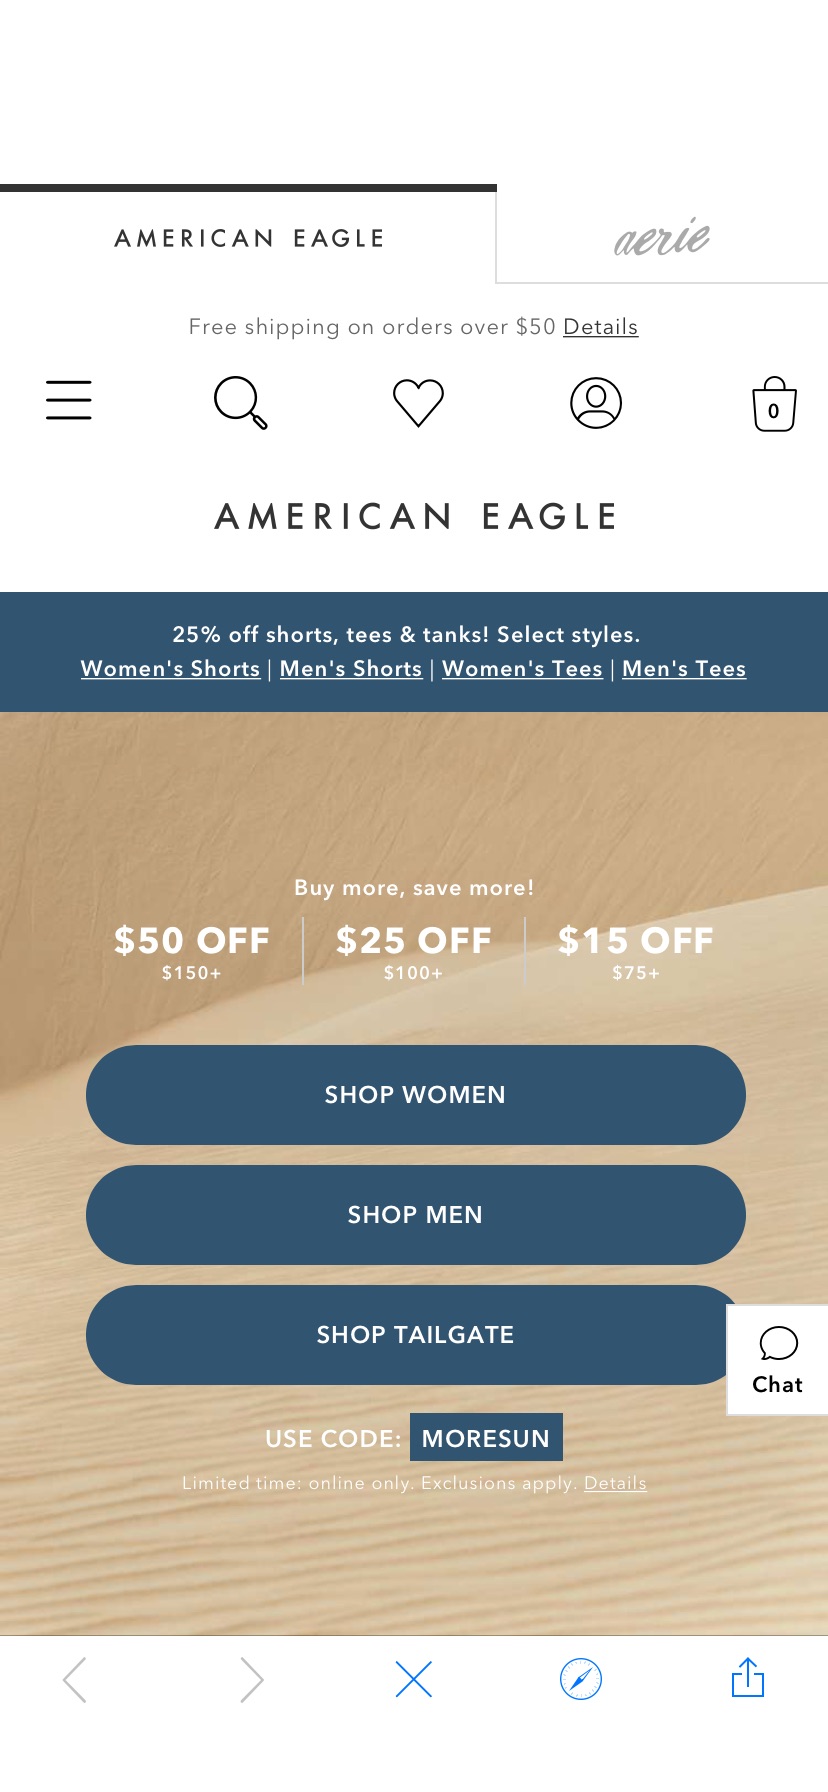 American Eagle Men’s & Women’s Jeans, Clothes & Accessories OFFLINE运动系列40%off，网页显示折扣价，并且可叠加满减活动。满减活动，折扣码：moresun。满$75减$15，满$100减$25，满$150减$50。满$50免运费。